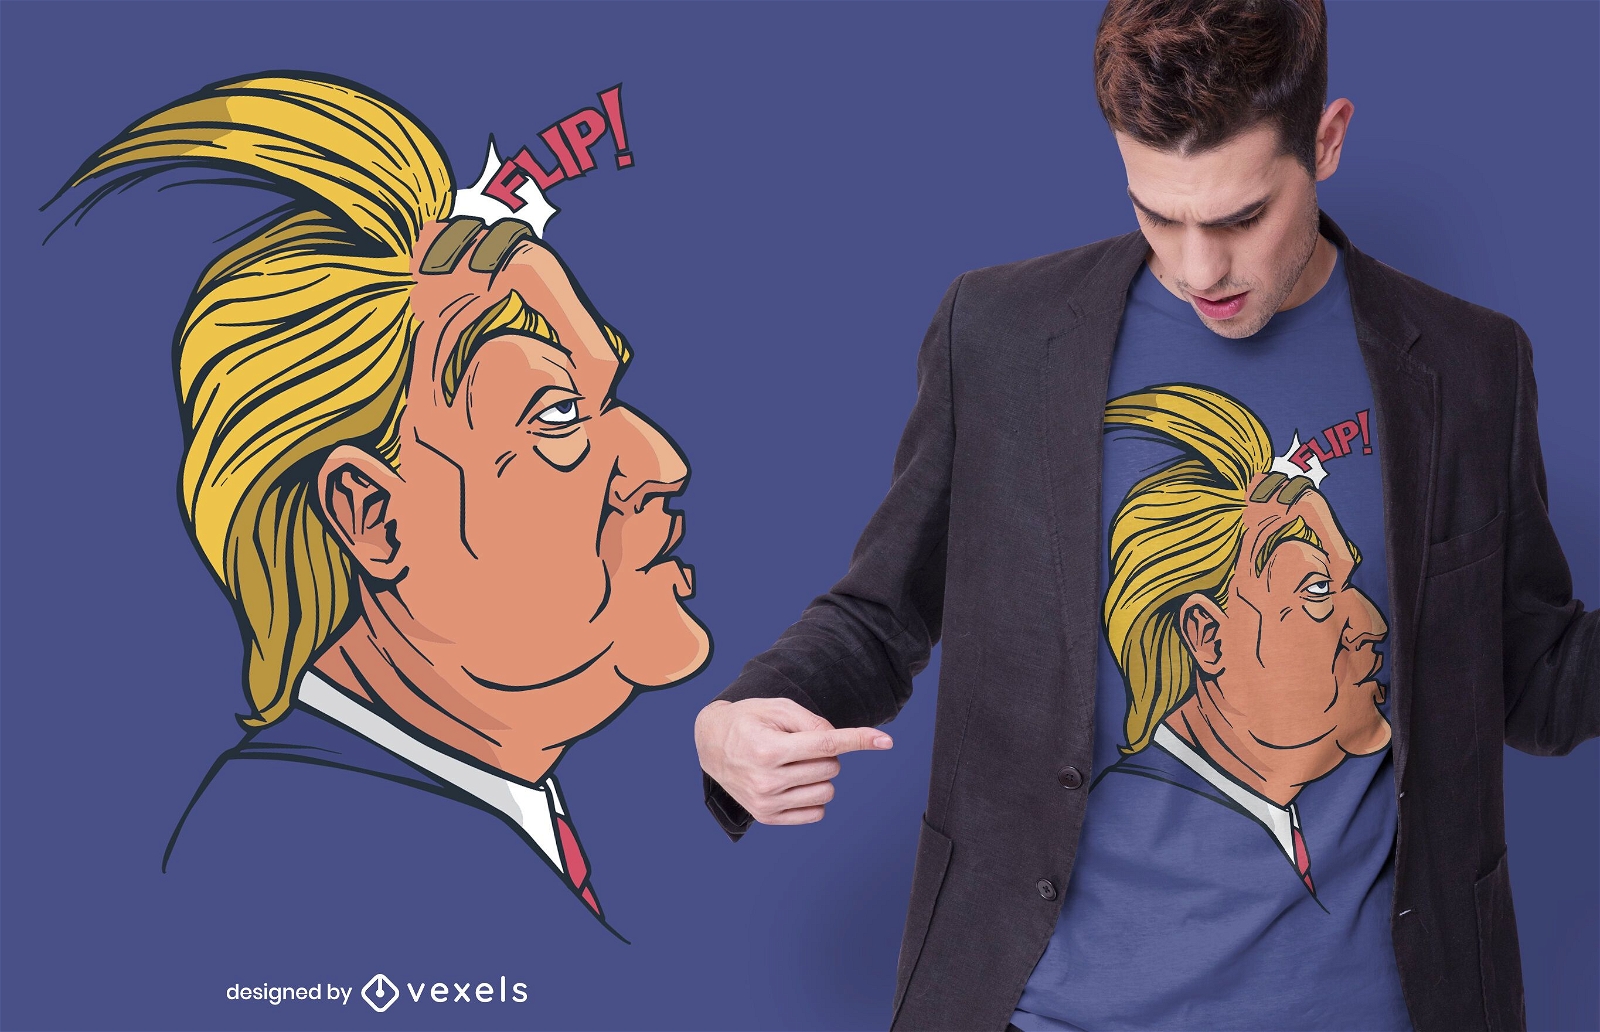 Trump hair flip t-shirt design